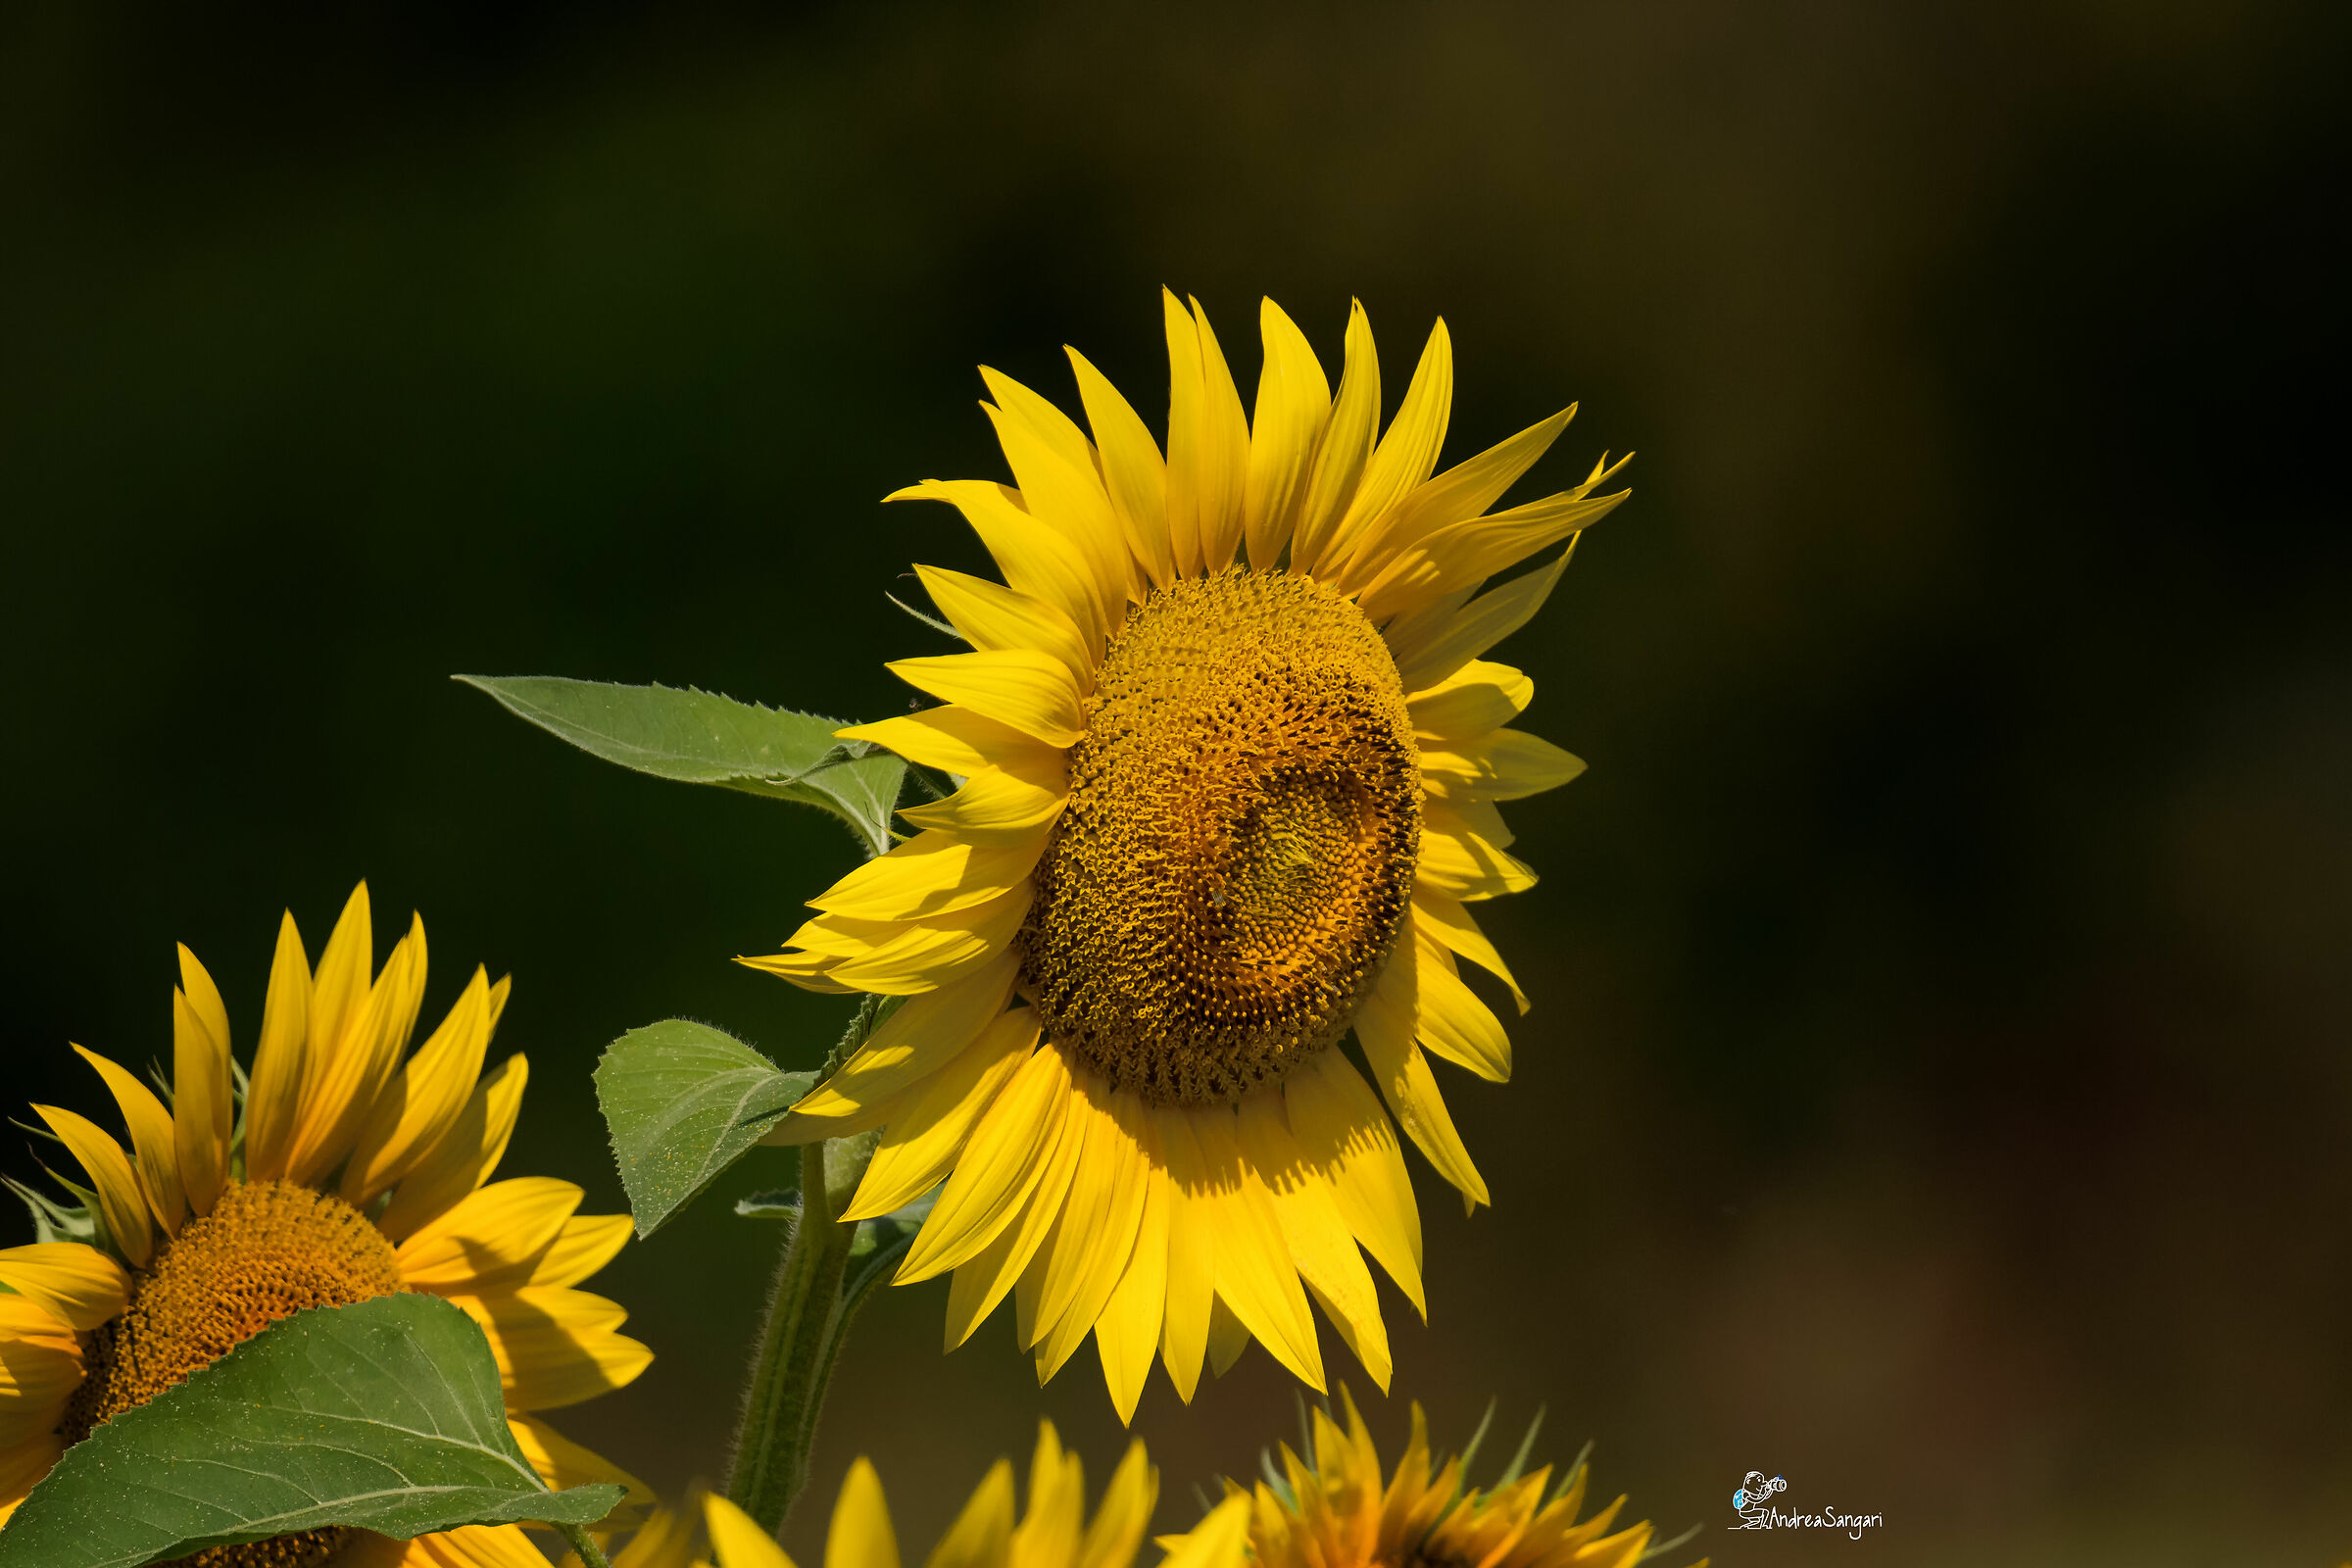 "The Sunflower"...